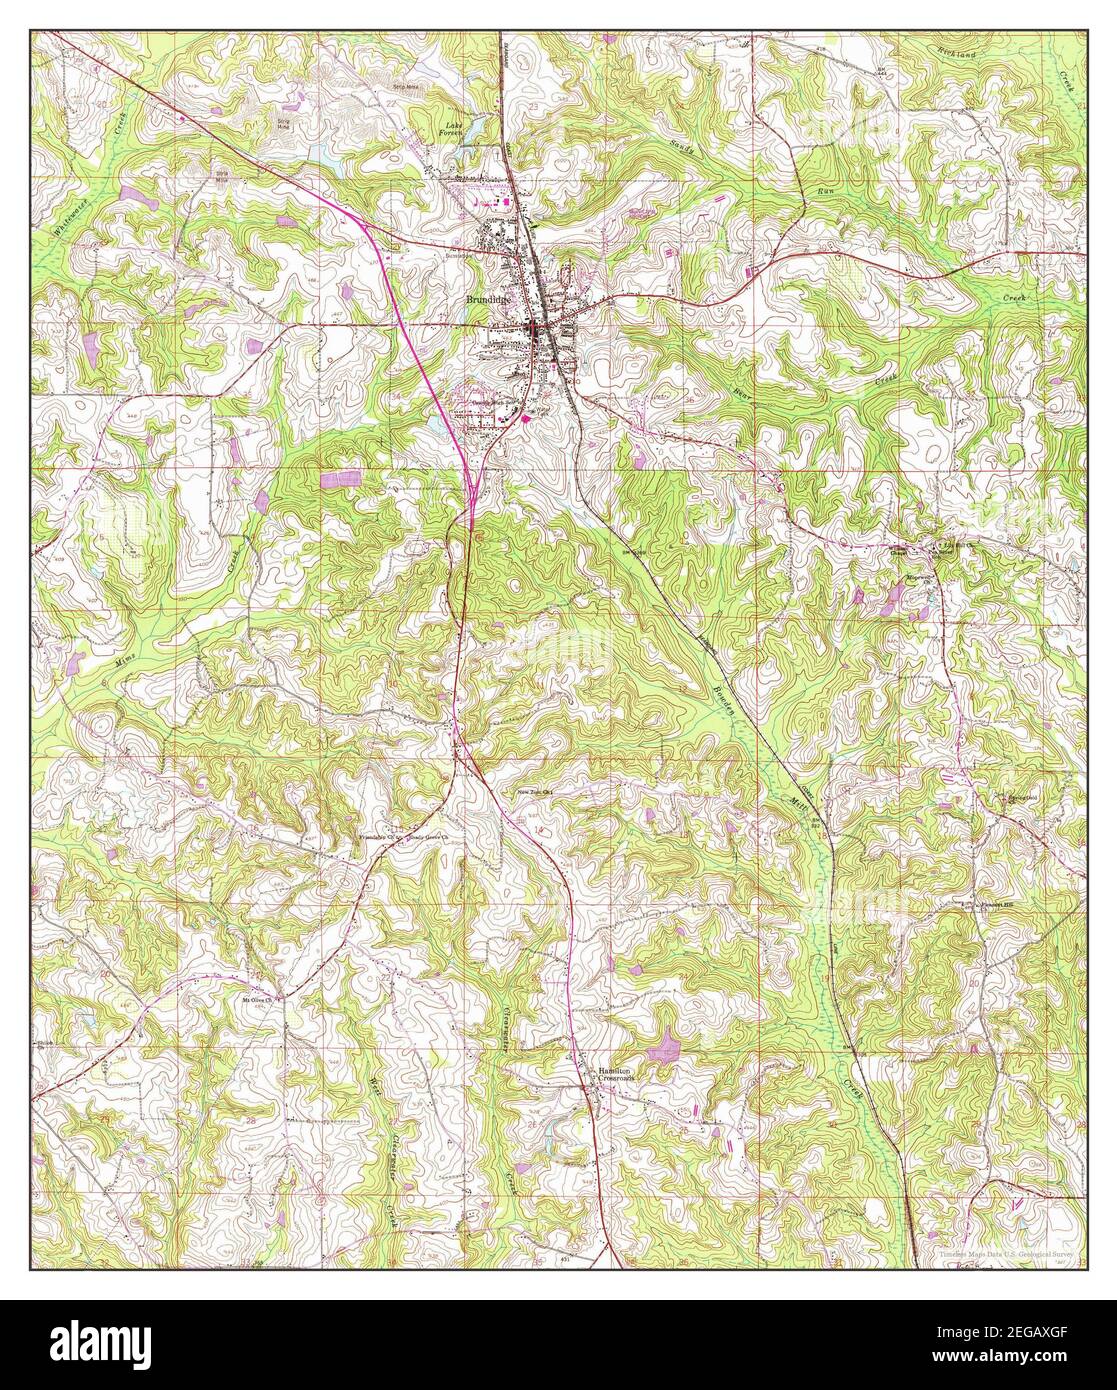 Brundidge, Alabama, map 1960, 1:24000, United States of America by Timeless Maps, data U.S. Geological Survey Stock Photo